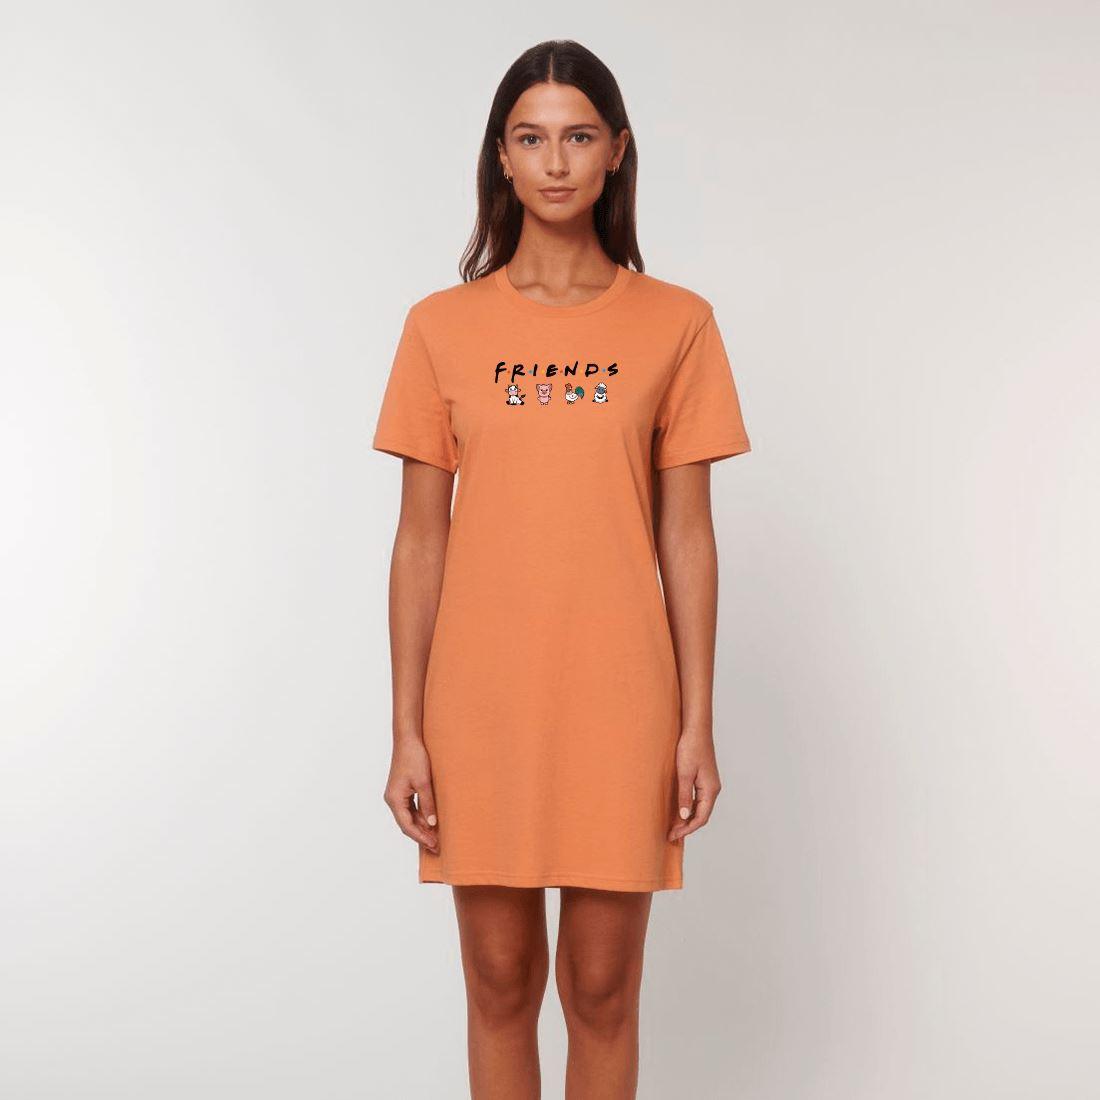 Friends - T-Shirt Kleid - Team Vegan © vegan t shirt